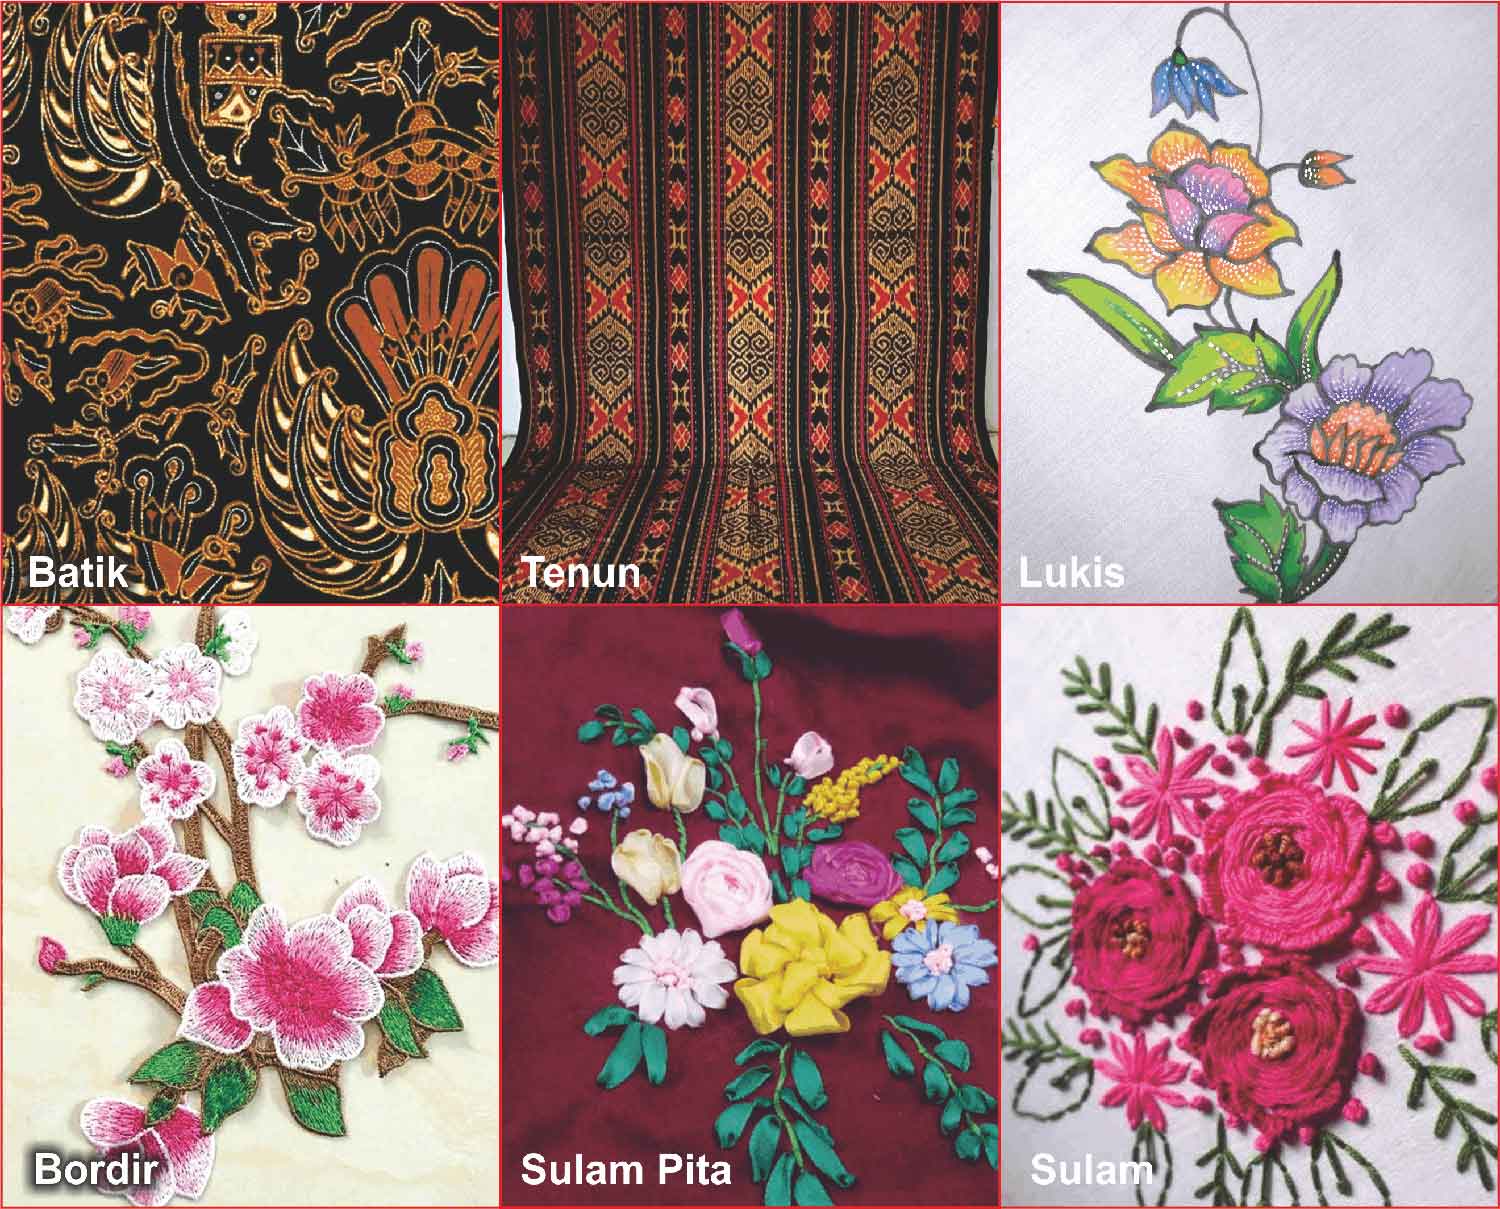 Kain batik yang bergambar bunga berarti menggunakan ragam hias